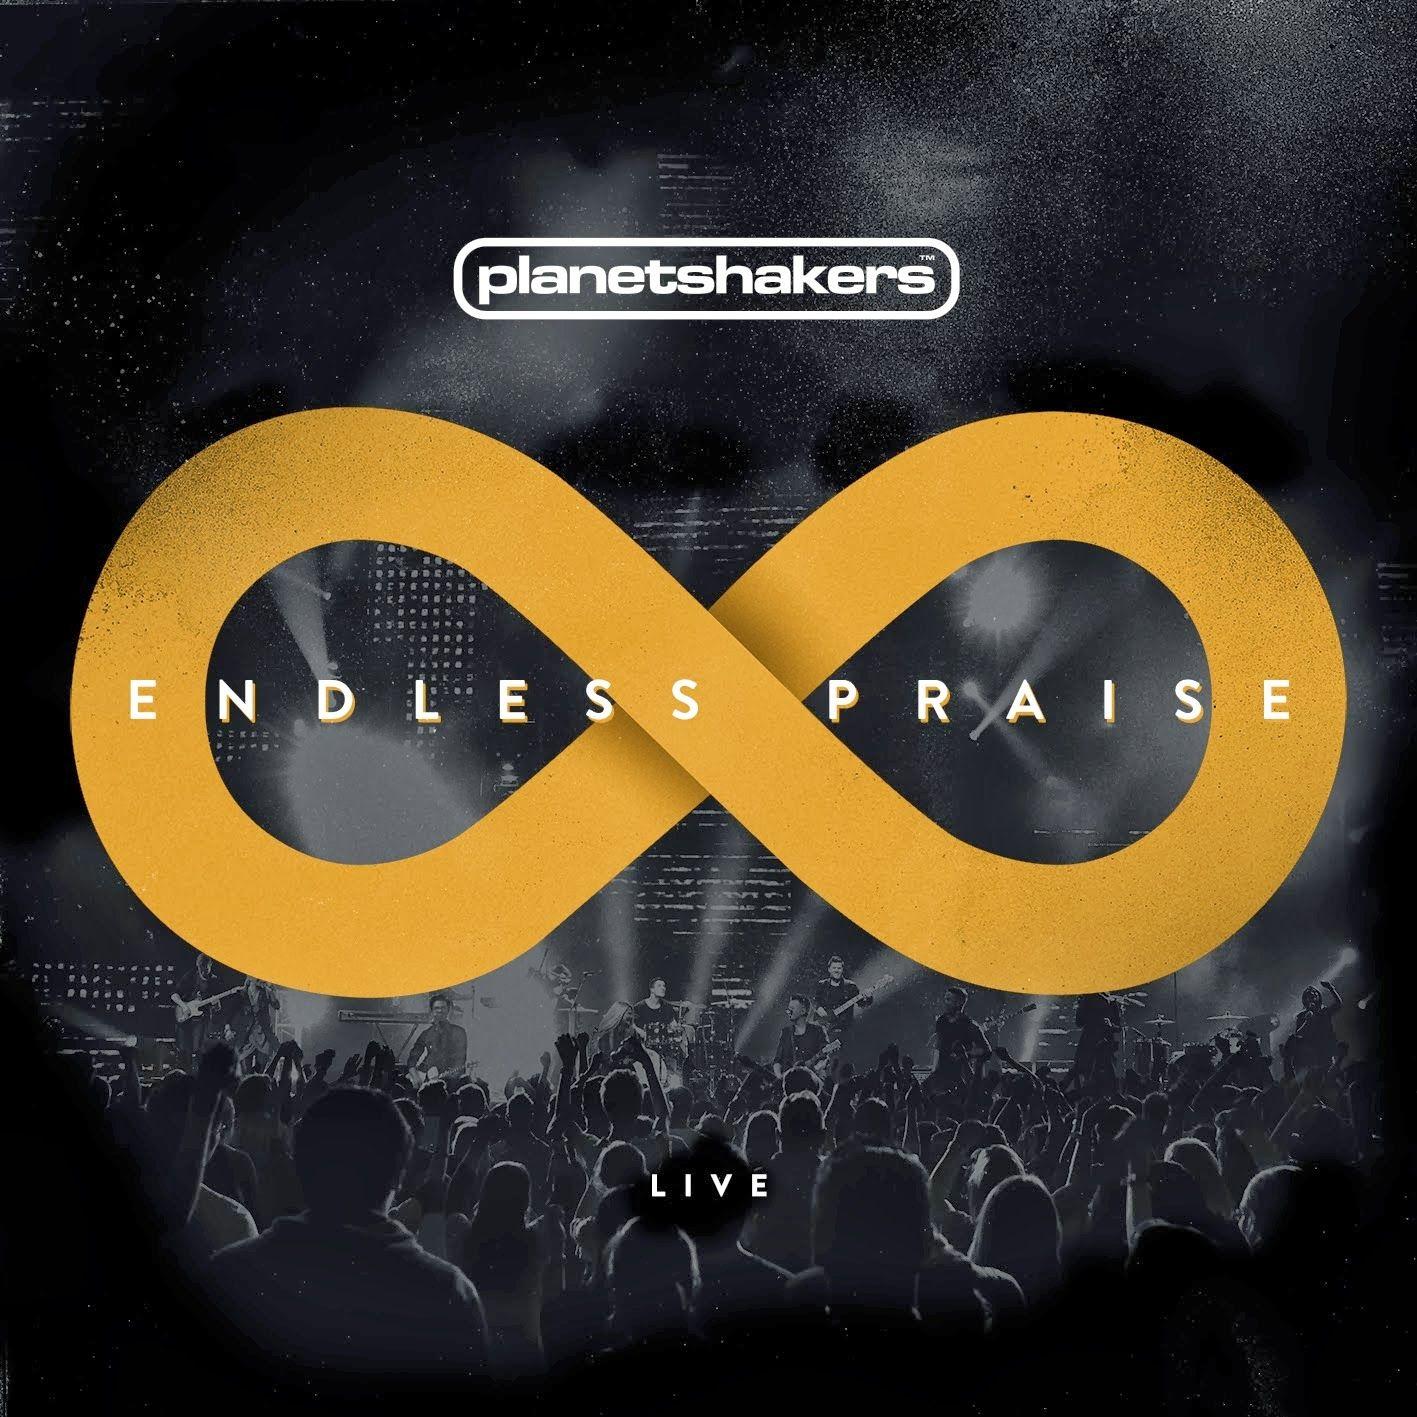 Planetshakers Band Praise Live 2014 English Christian